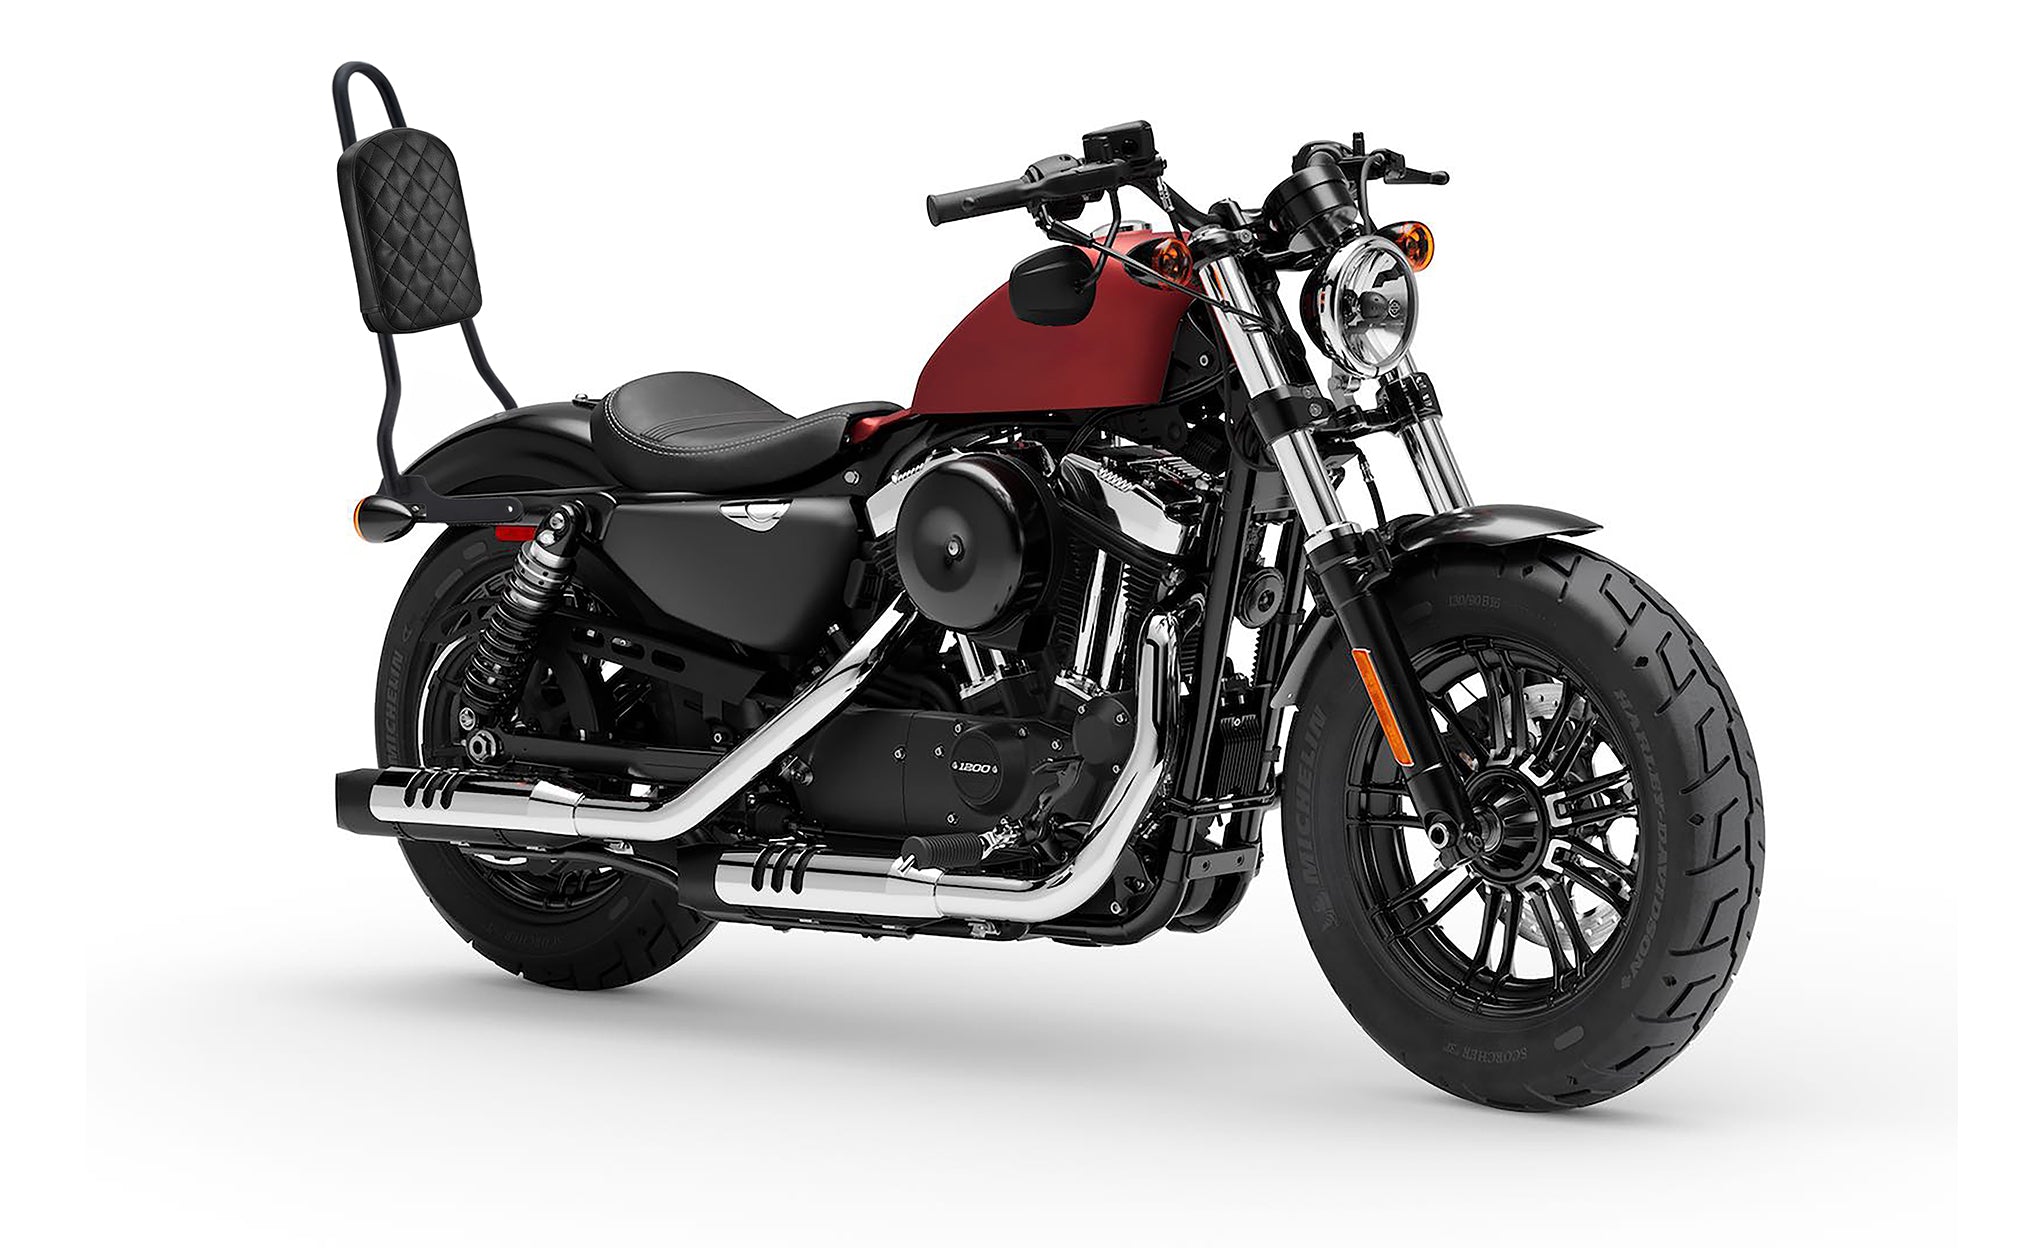 Viking Iron Born Diamond Stitch Leather Tall Motorcycle Sissy Bar Pad for Harley Davidson Bag on Bike View @expand